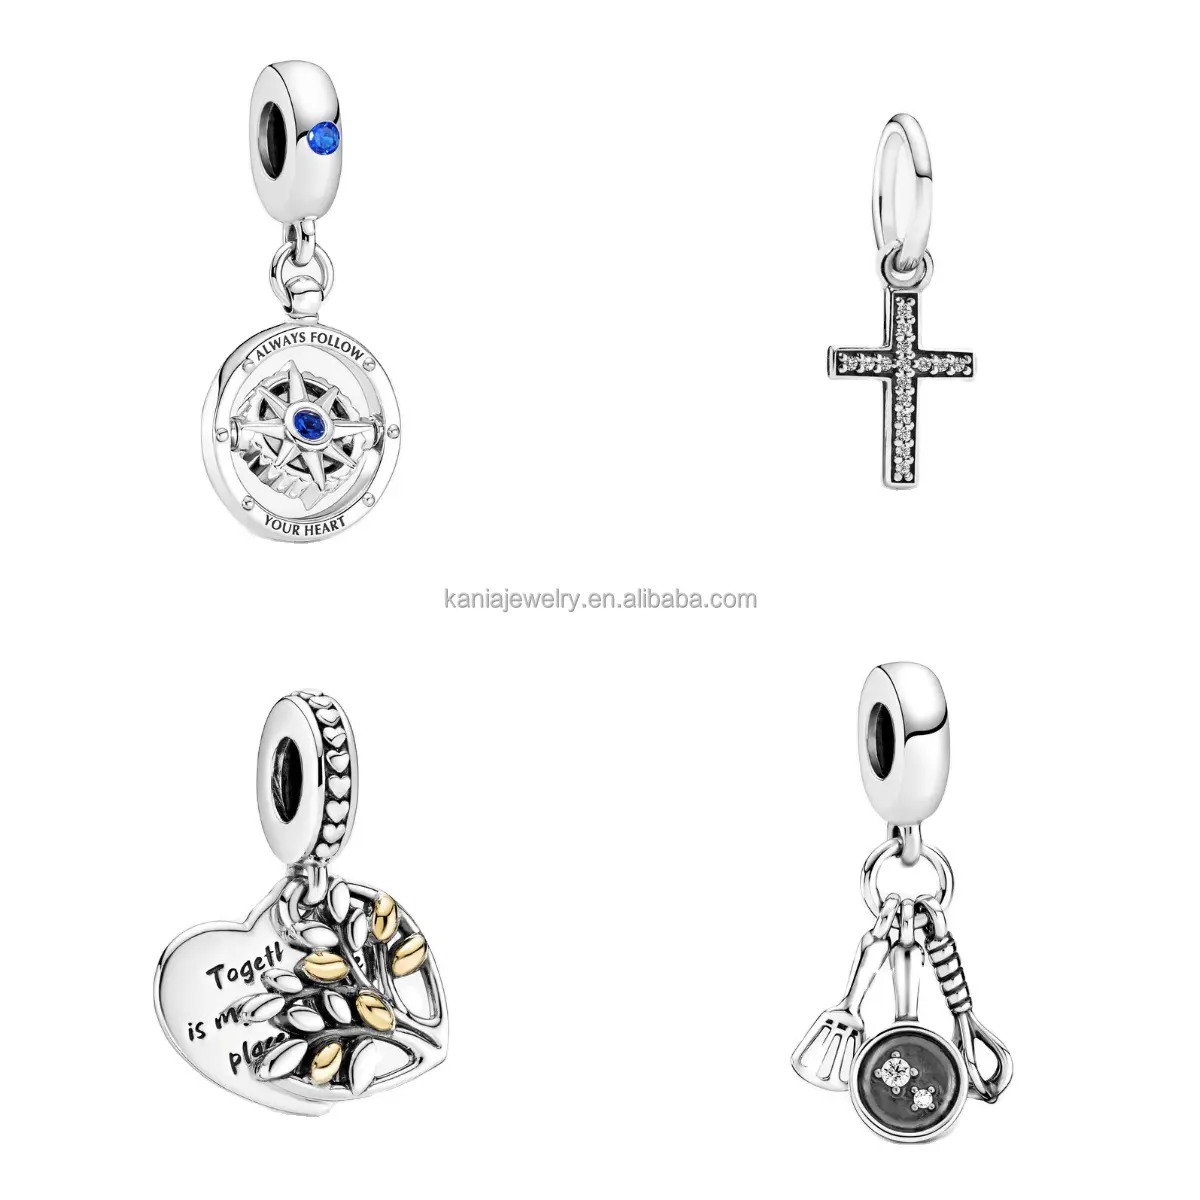 New Trendy 925 Silver Cross Mickey Mouse gift DIY Suitable for original Pandoraer bracelet Pendant Collection Charm Bracelet